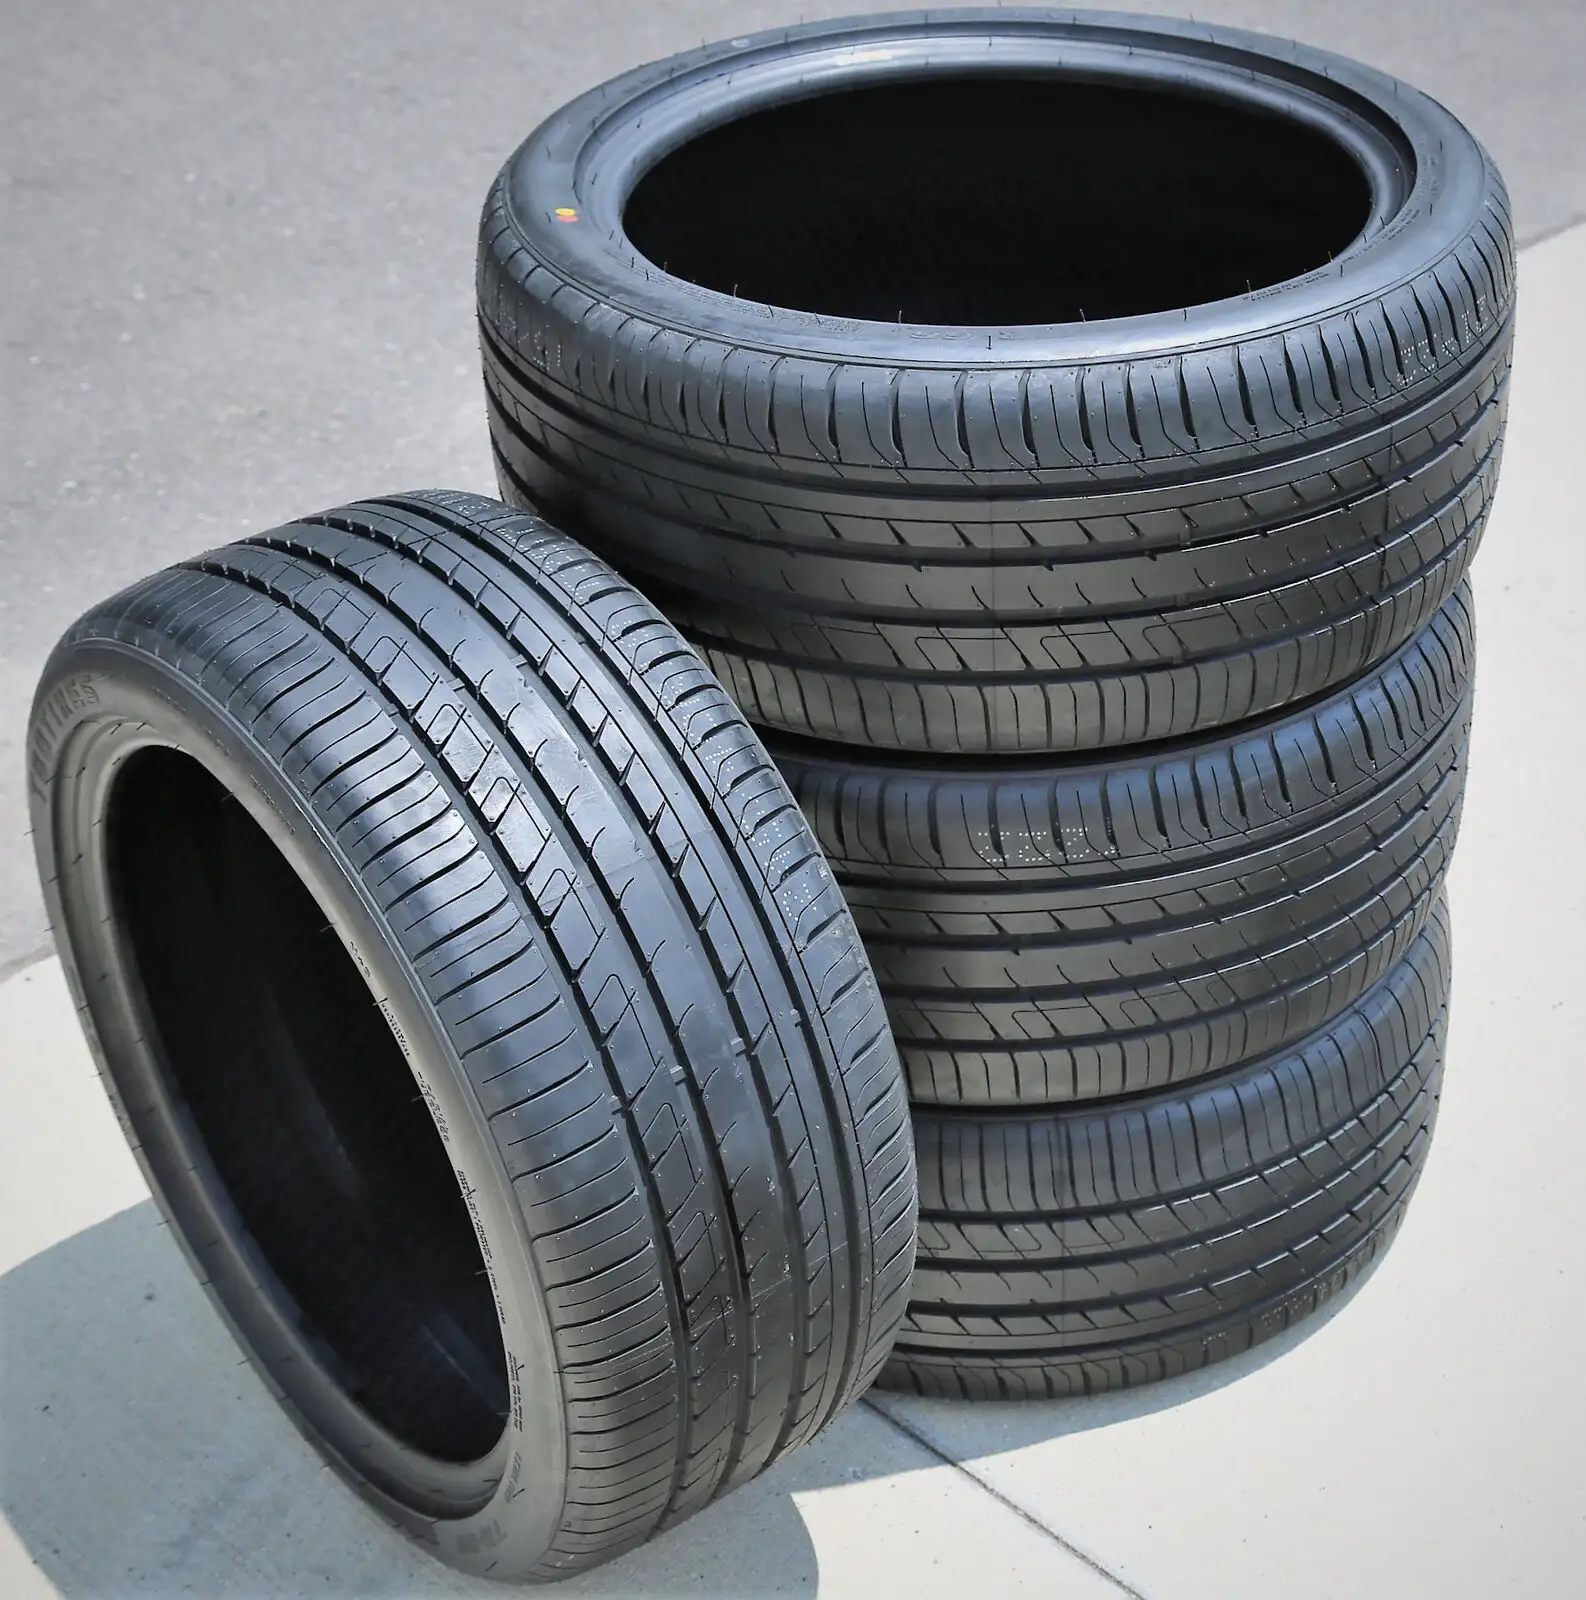 TR-66 215/50ZR17 215/50R17 95W XL AS A/S High Performance Tire for Car